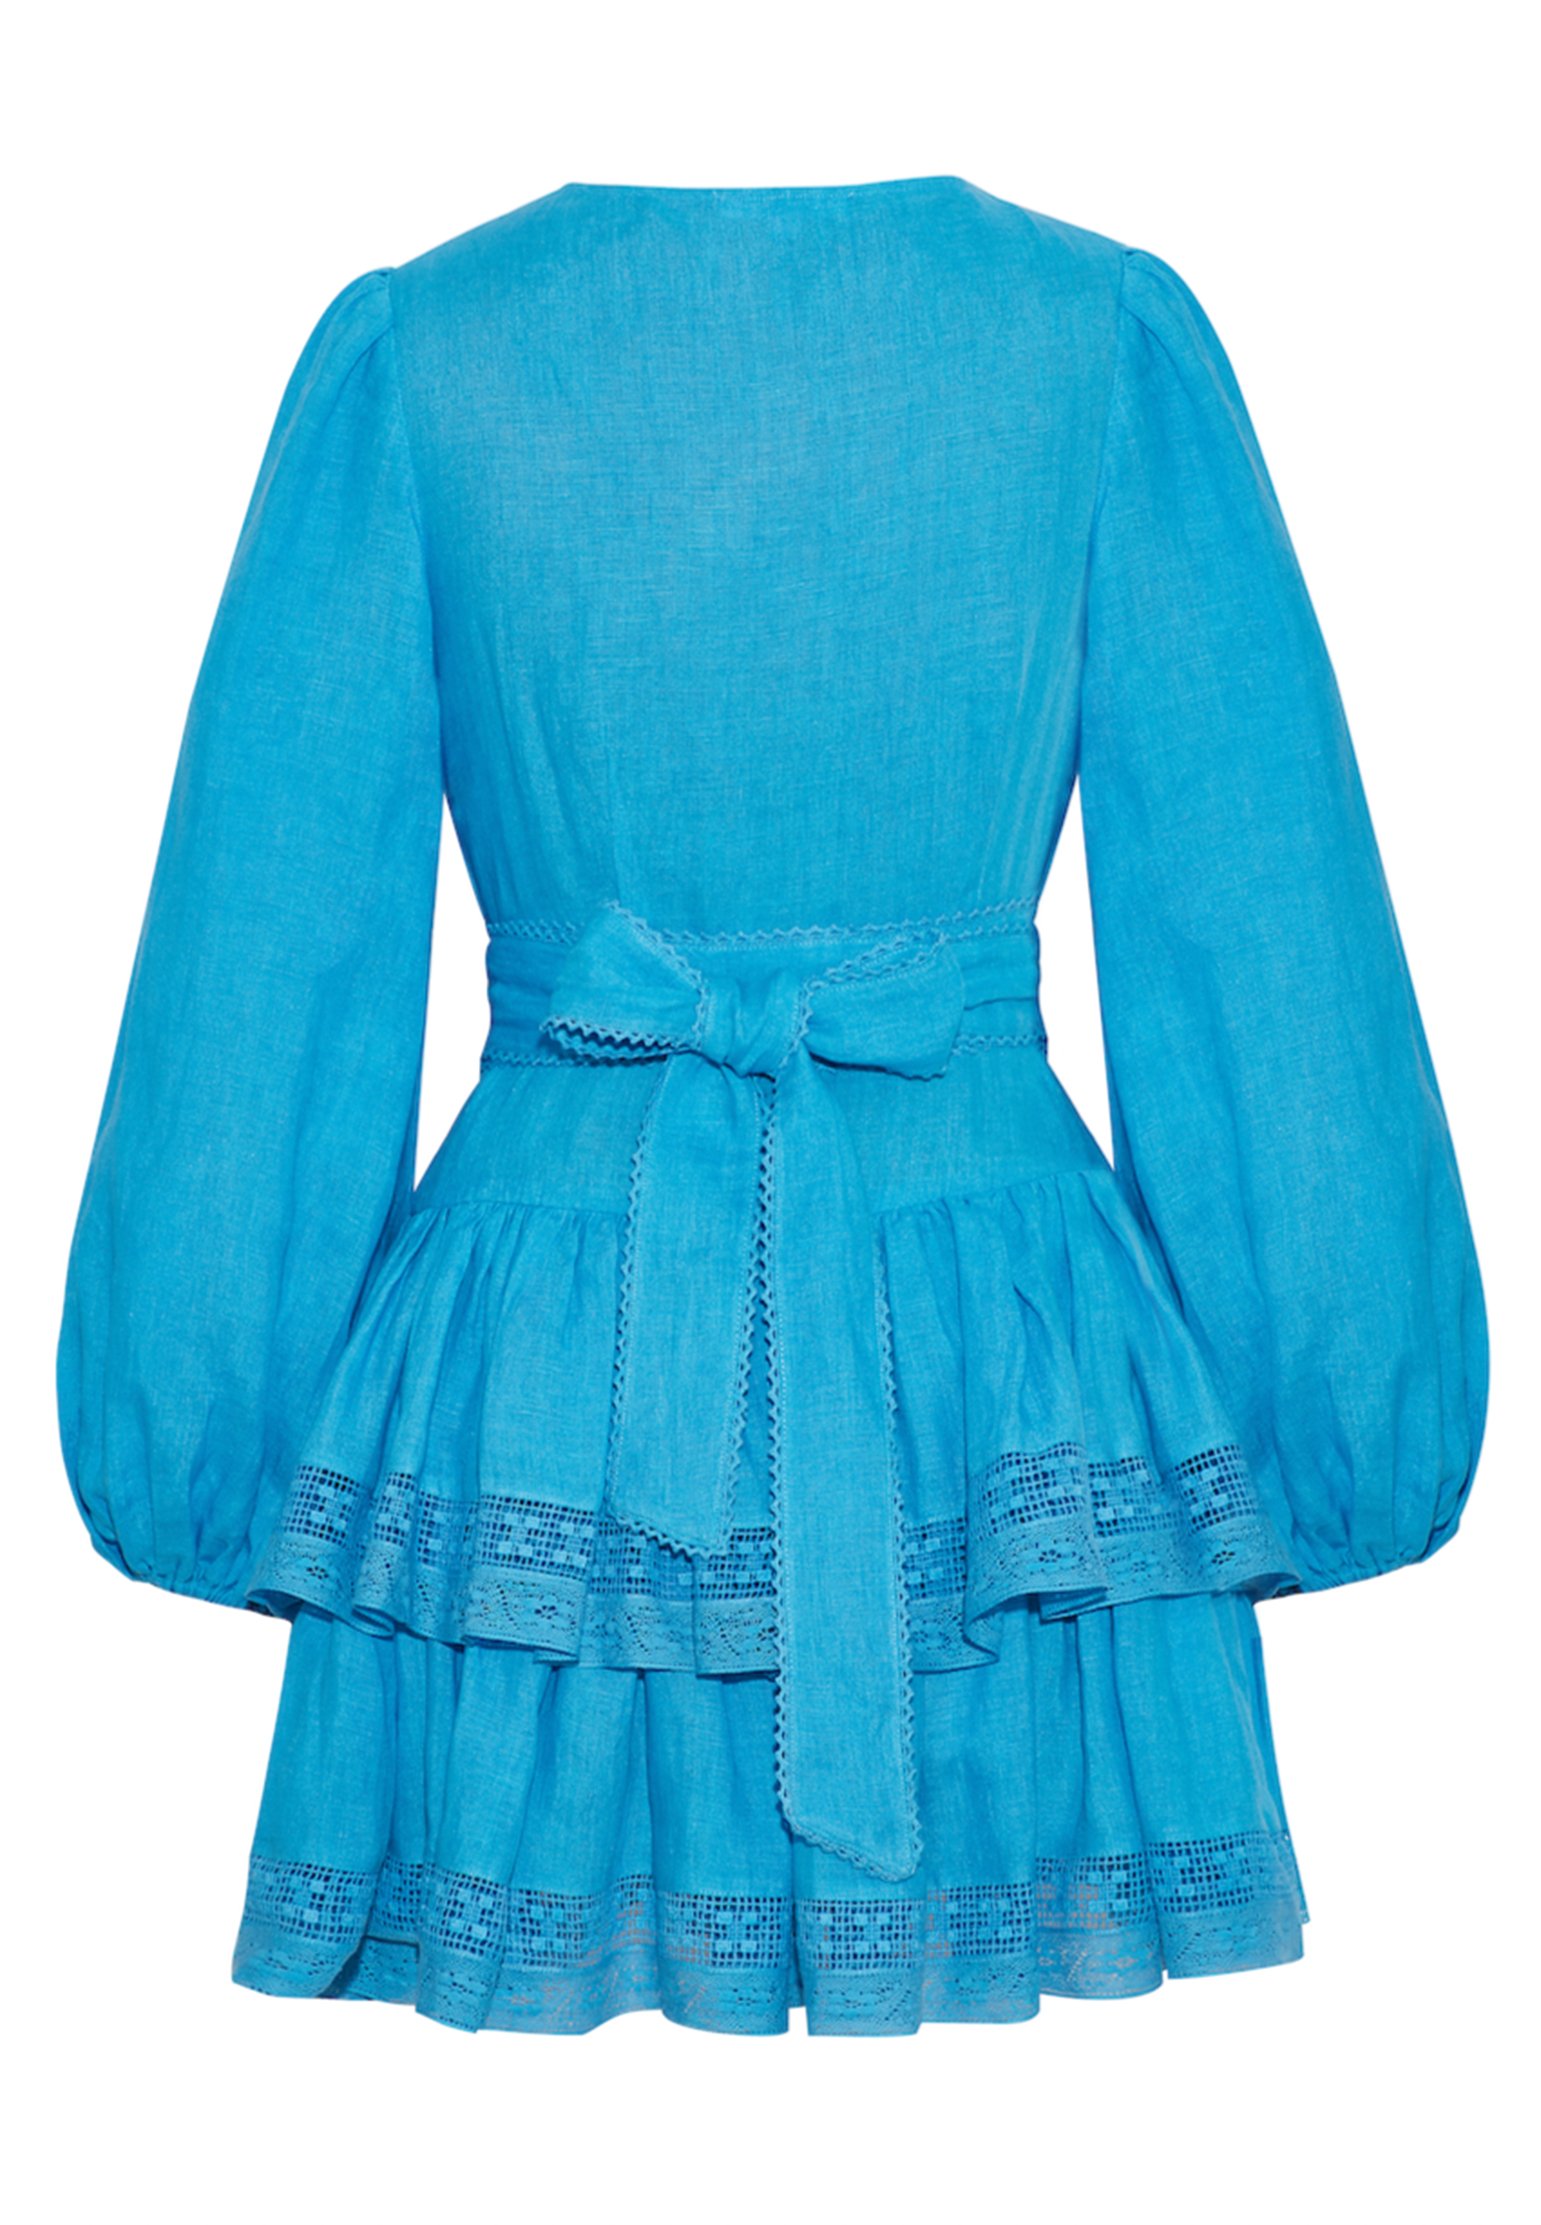 Dress MAIA BERGMAN Color: blue (Code: 2251) in online store Allure